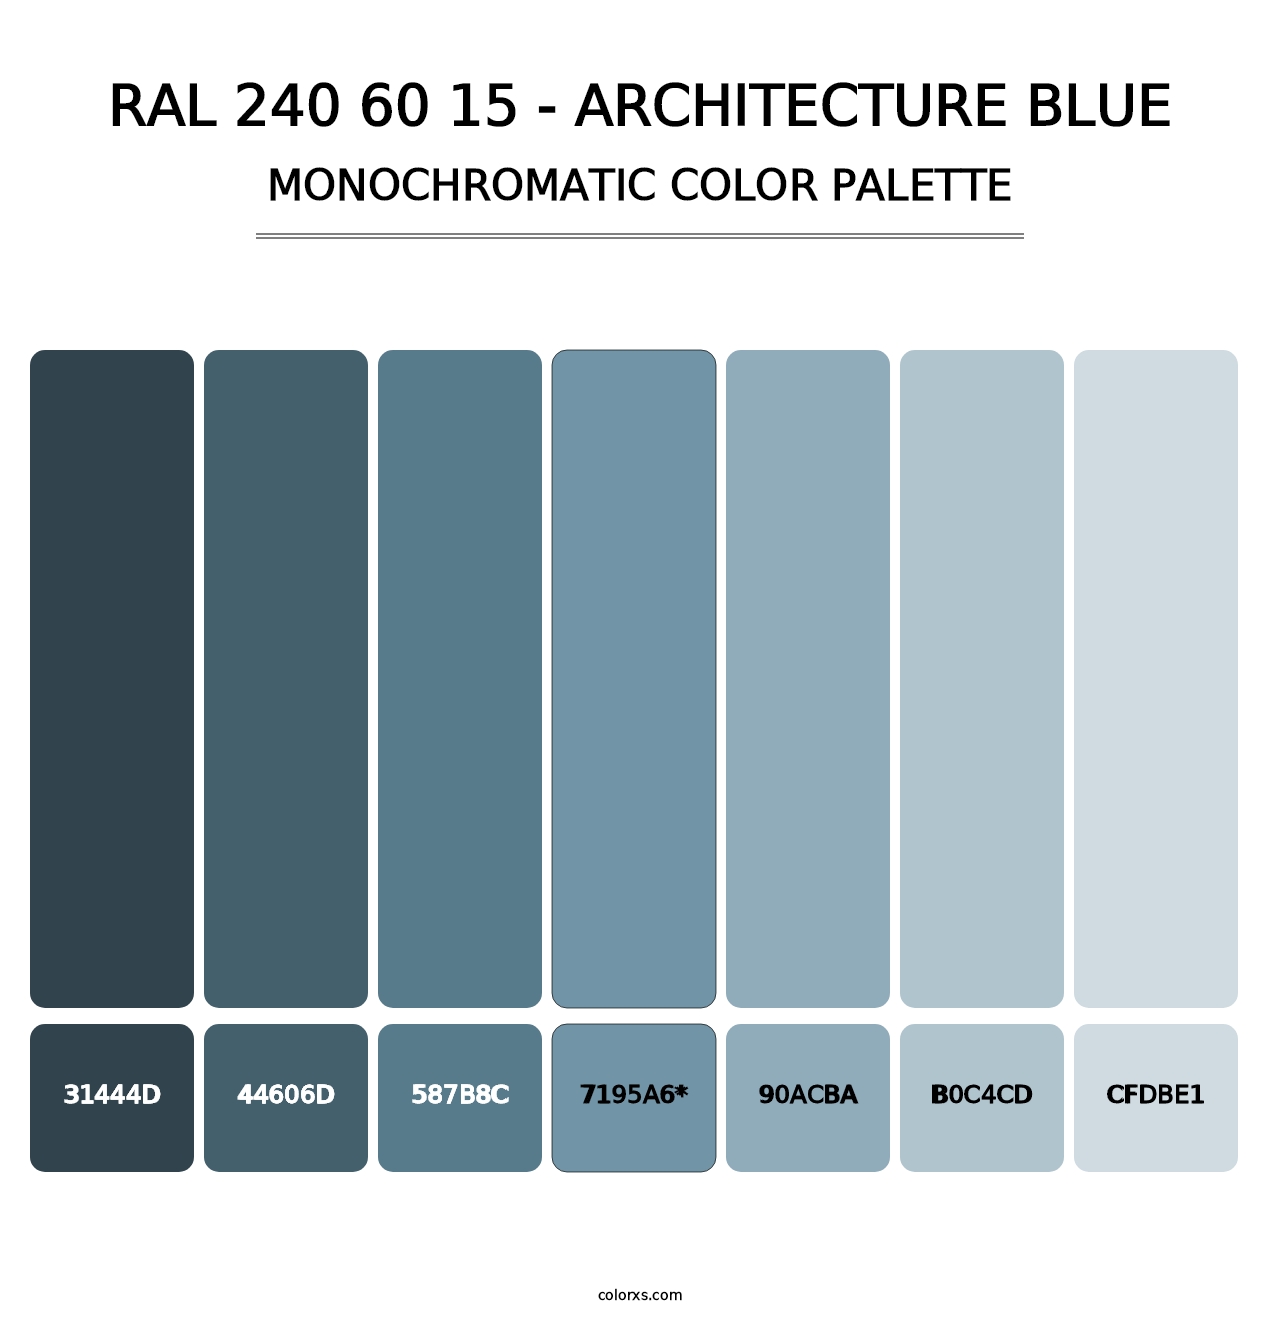 RAL 240 60 15 - Architecture Blue - Monochromatic Color Palette